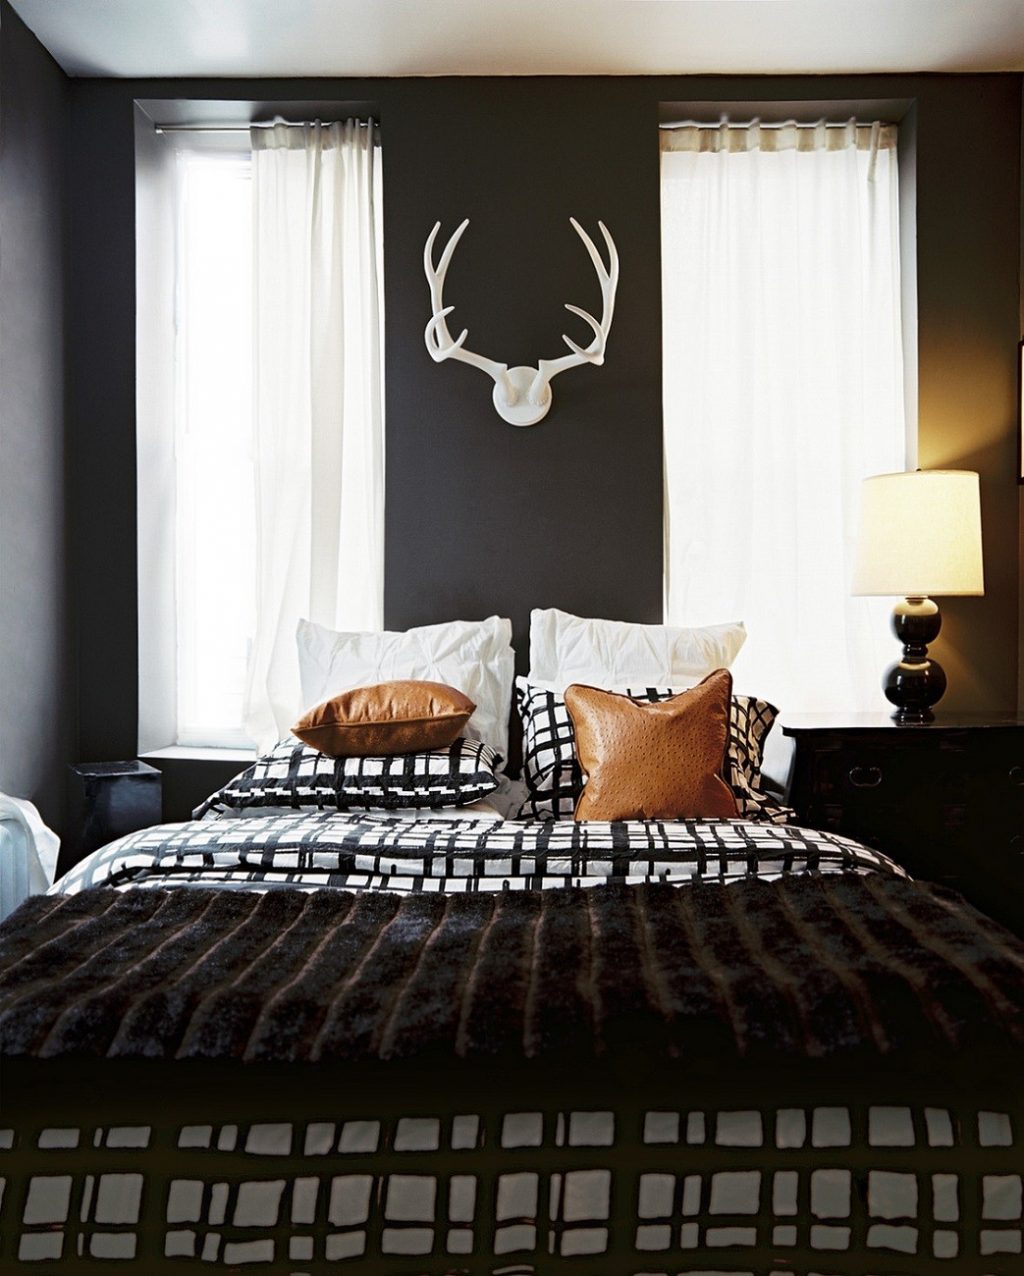 The Best Men's Bedroom Wall Decor Ideas | Decor Or Design